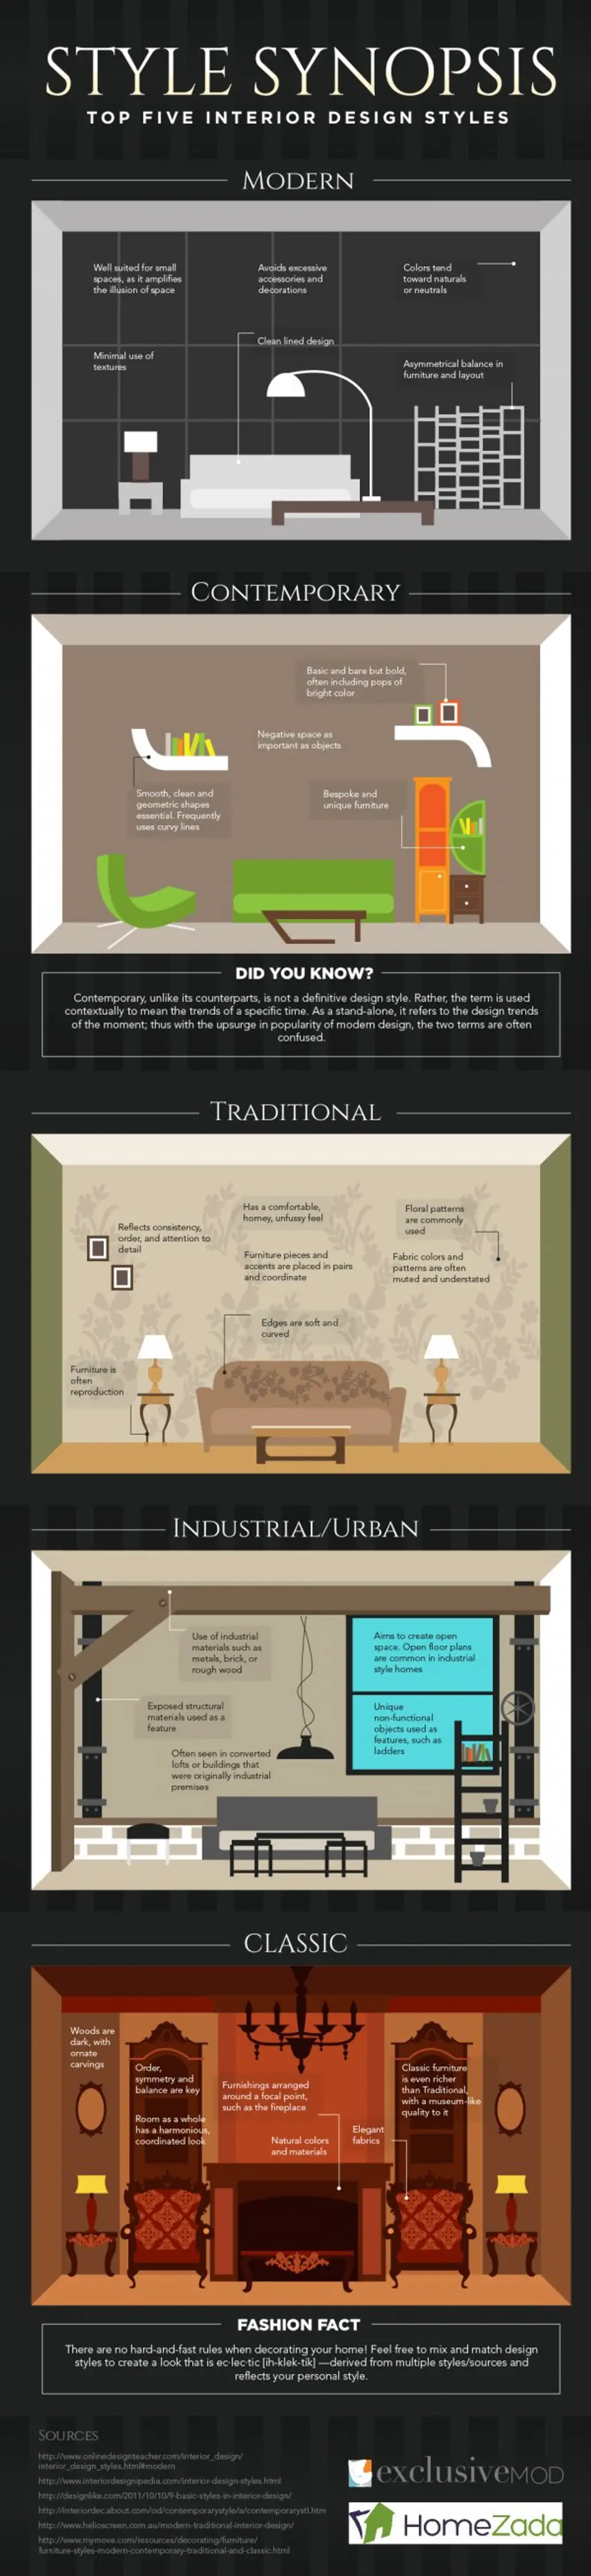 Top Five Interior Design Styles